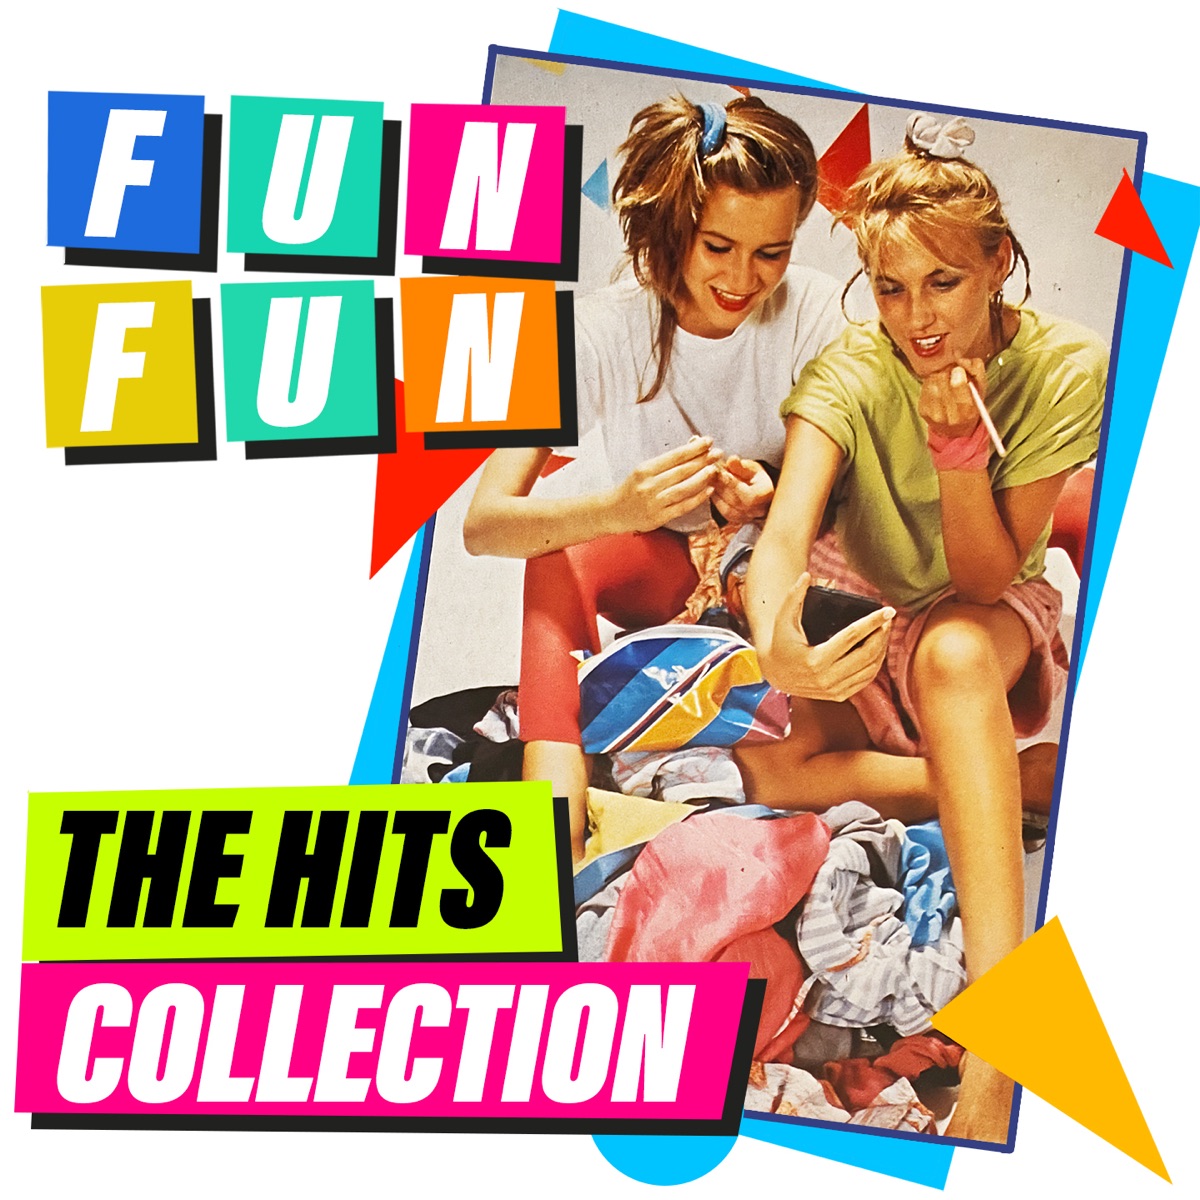 Greatest Hits (Remixes & Unreleased Tracks) - Album by Fun Fun - Apple Music